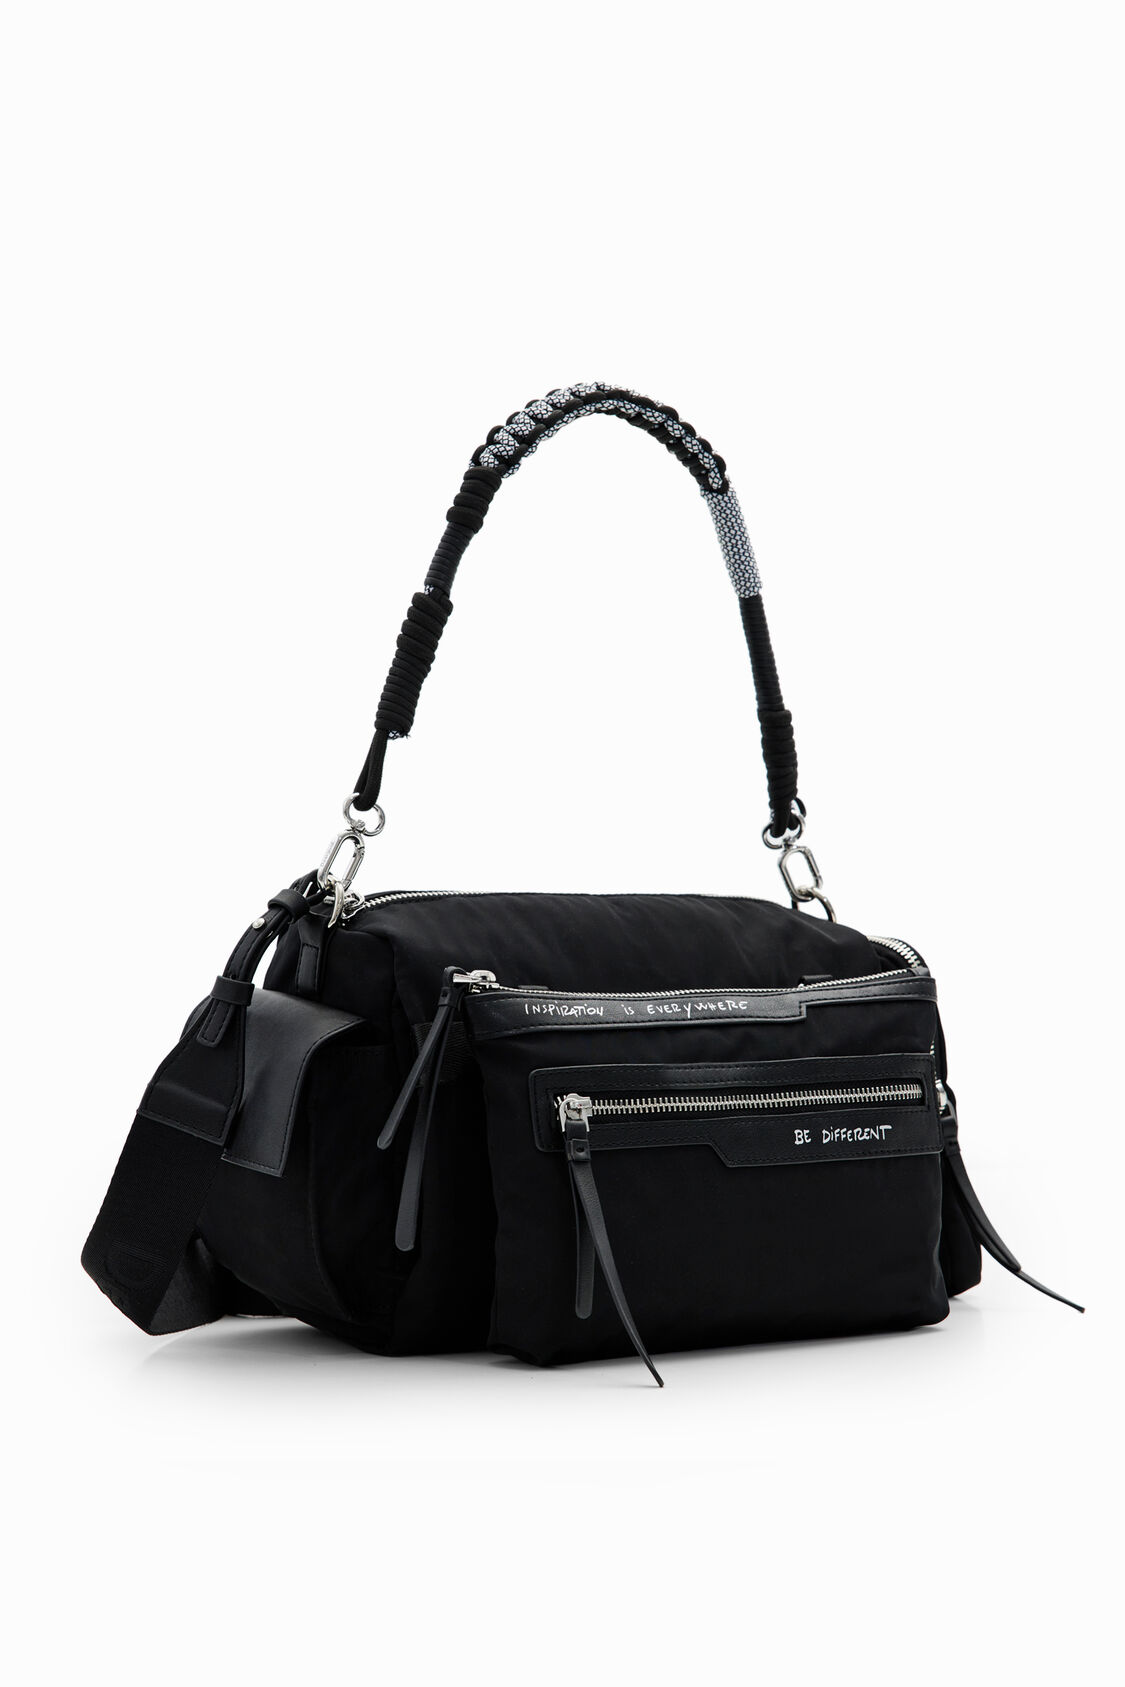 GIVENCHY Antigona Braided Handbag - More Than You Can Imagine